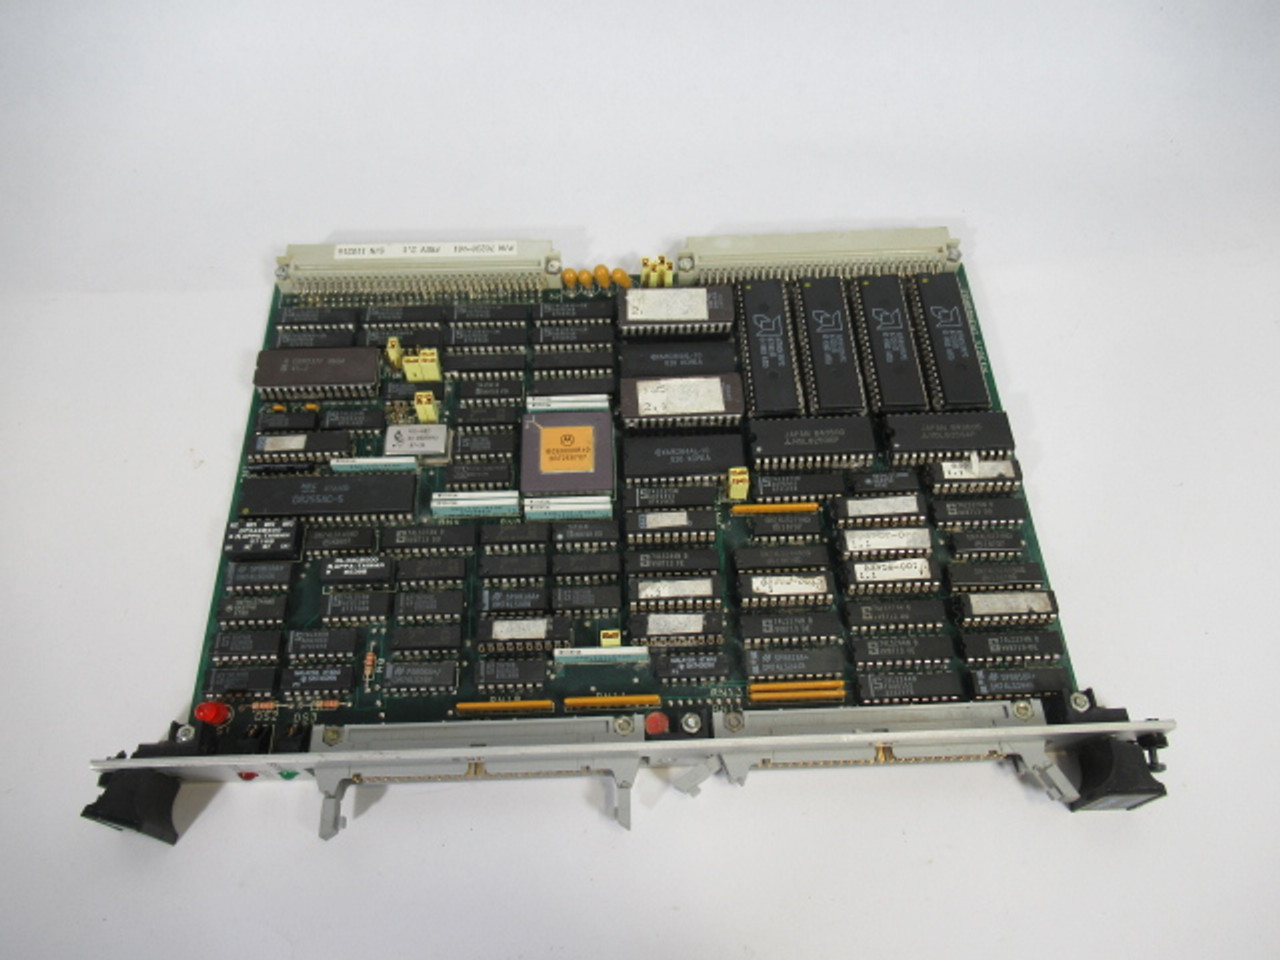 Xycom 70230-001 FREV 2.1 Intelligent Counter Module Card USED